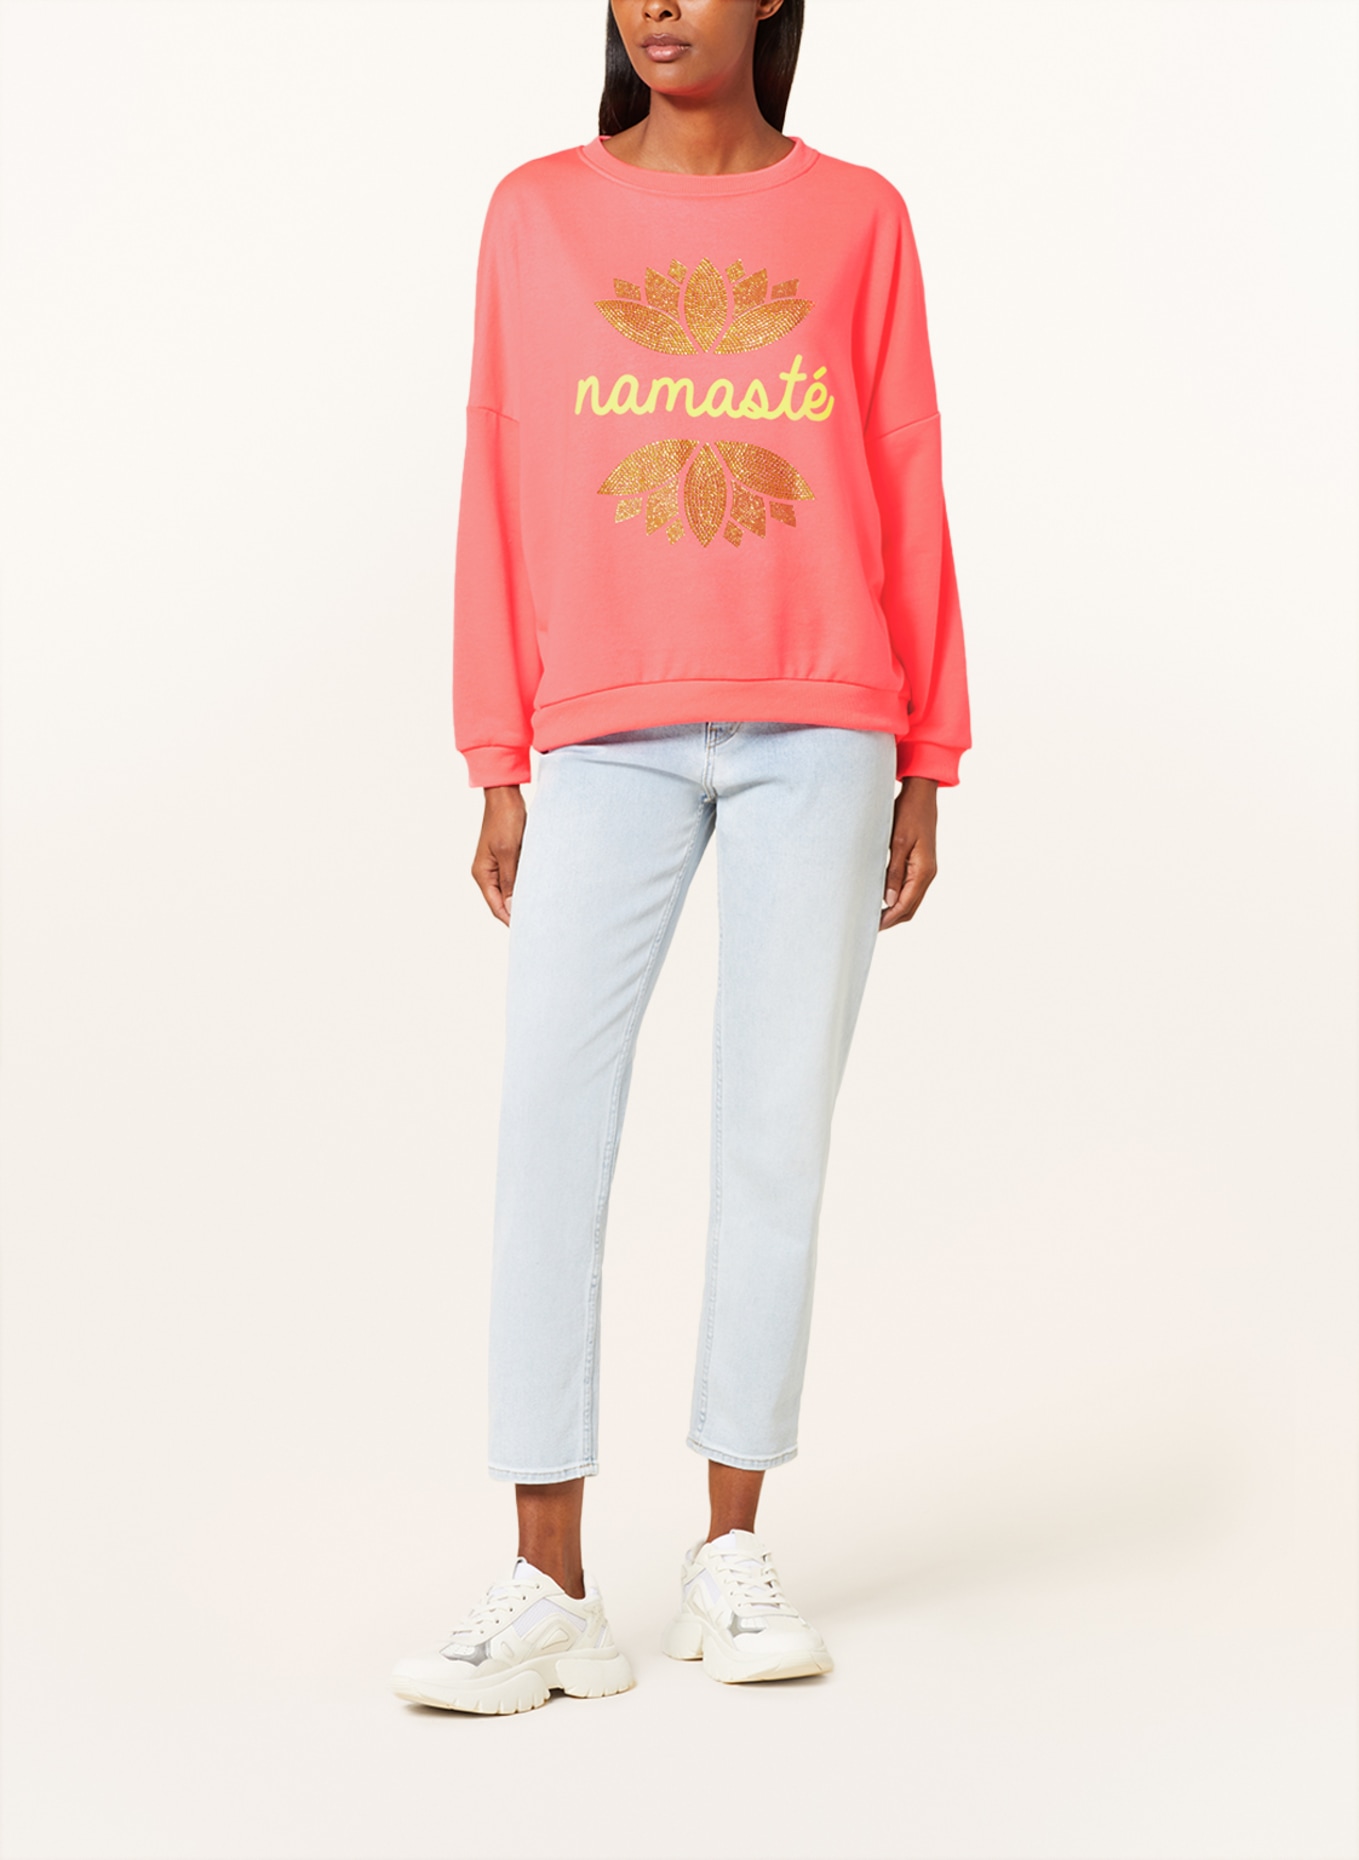 miss goodlife Sweatshirt NAMASTE with decorative gems, Color: NEON PINK/ NEON YELLOW (Image 2)